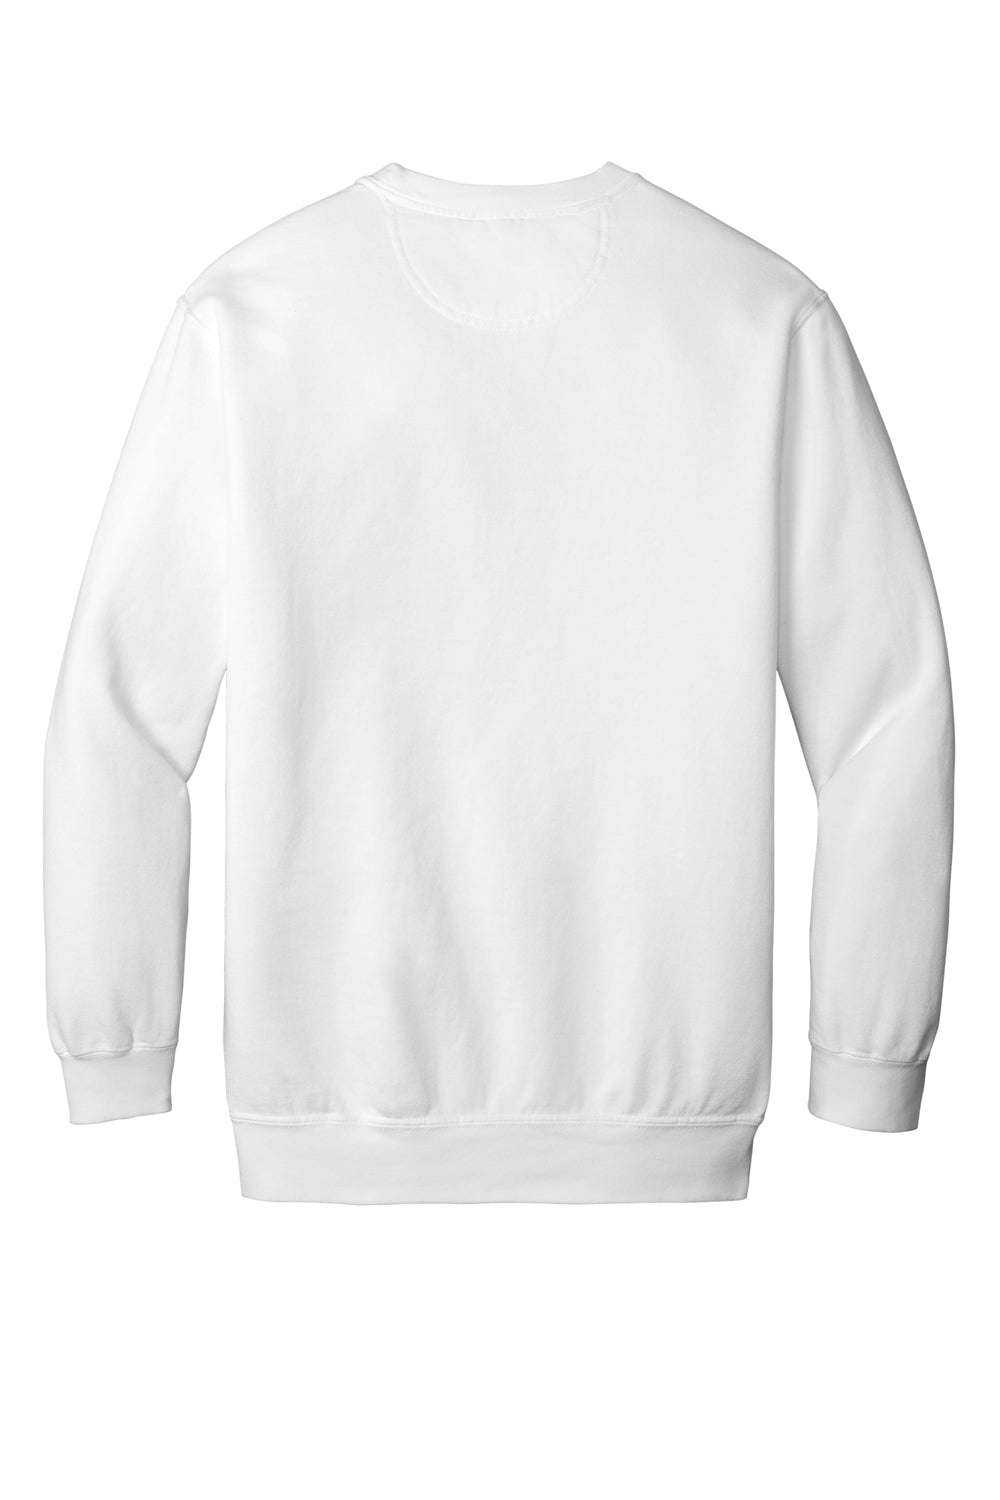 Comfort Colors 1566 Mens Crewneck Sweatshirt White Flat Back